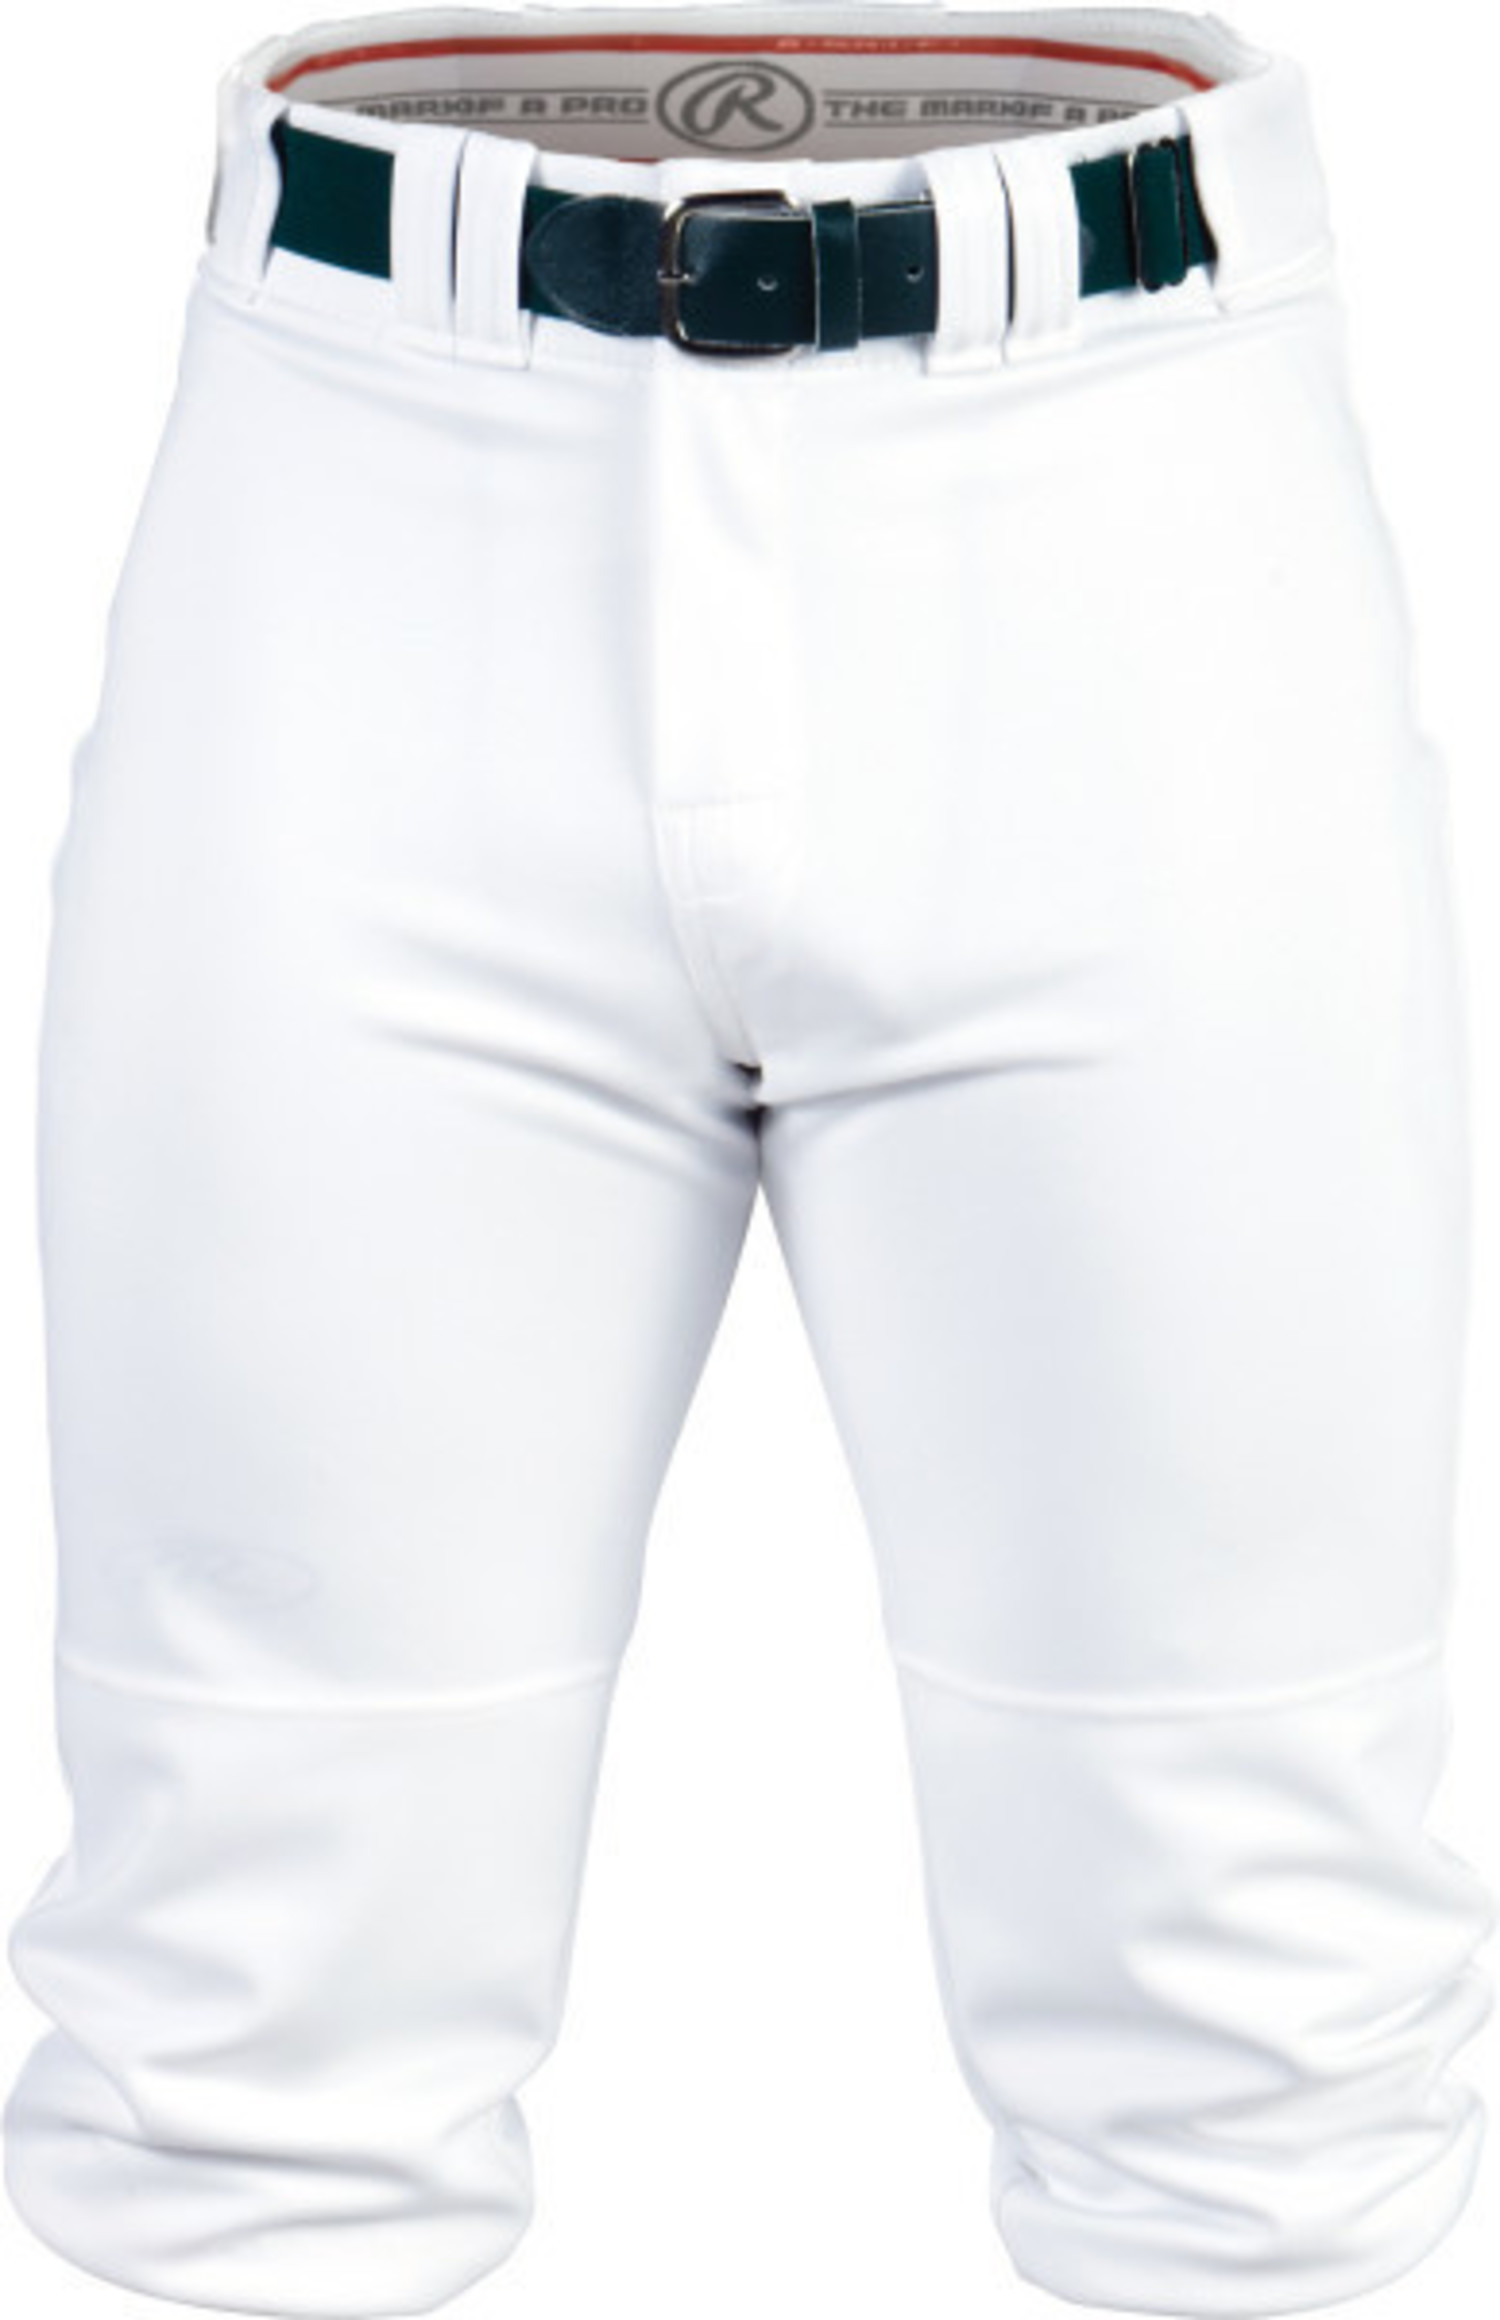  FTRP-150J Baseball Uniform Pants, Giga Stretch Pants